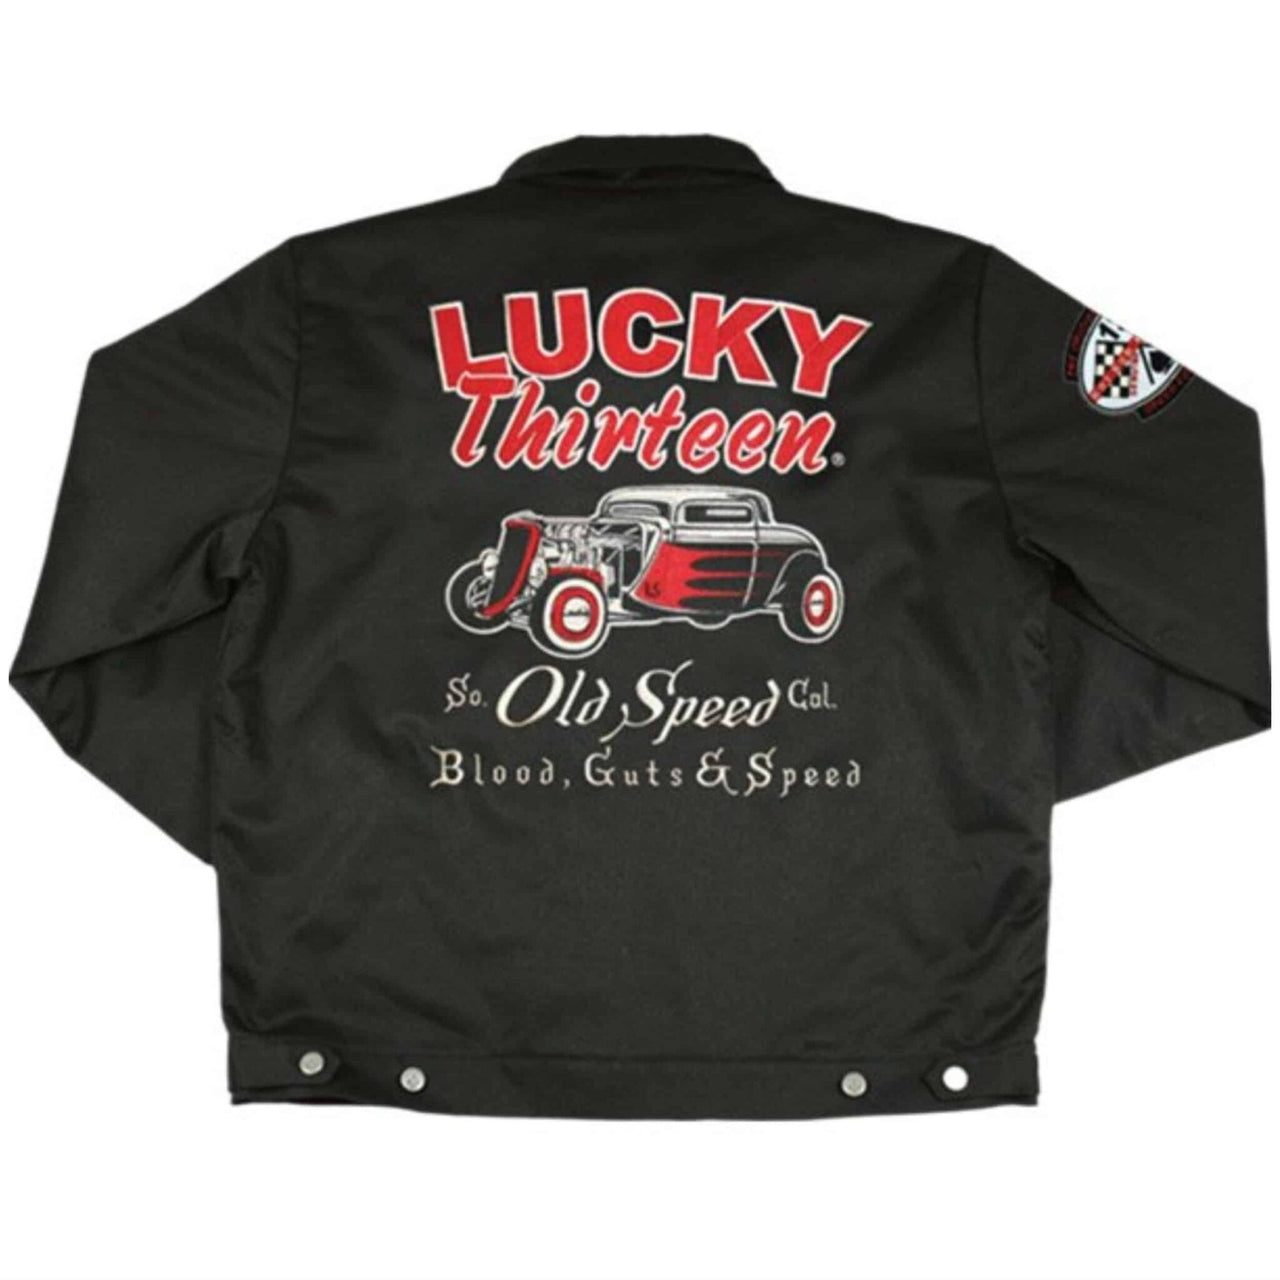 Lucky 13 Jacket Old Speed